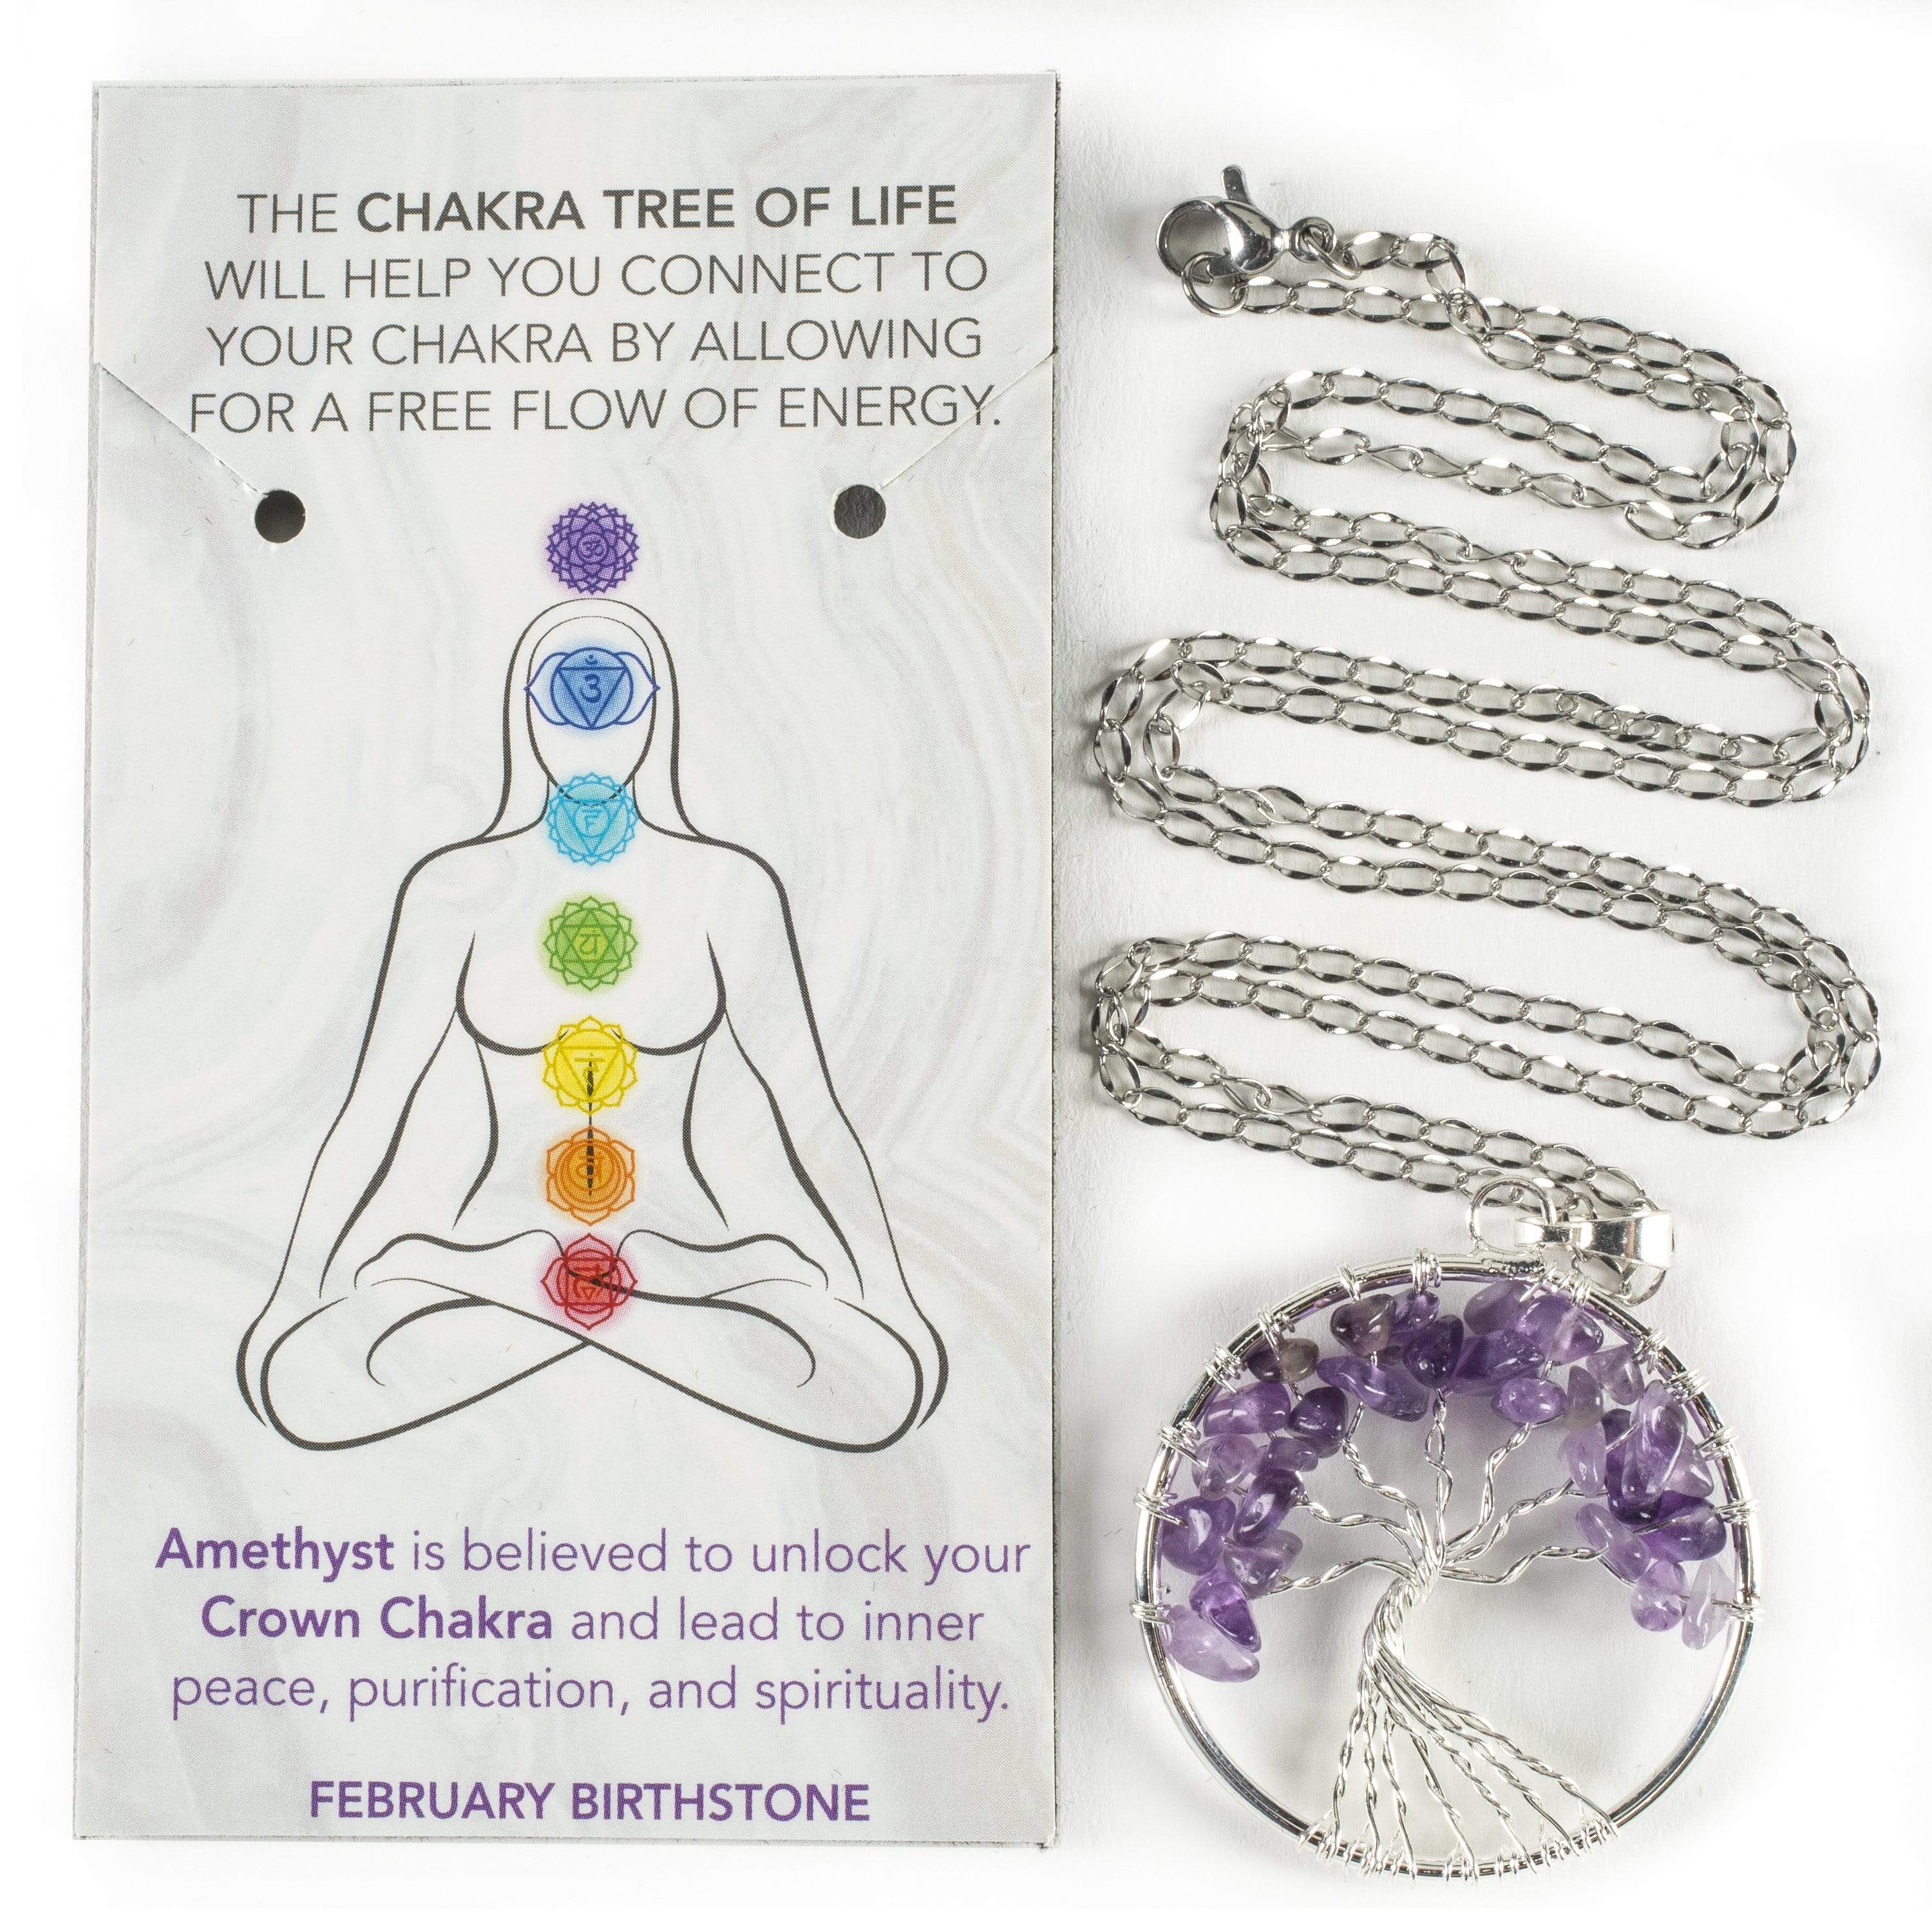 KALIFANO  Amethyst Tree of Life Necklace - Healing Energy & Beauty